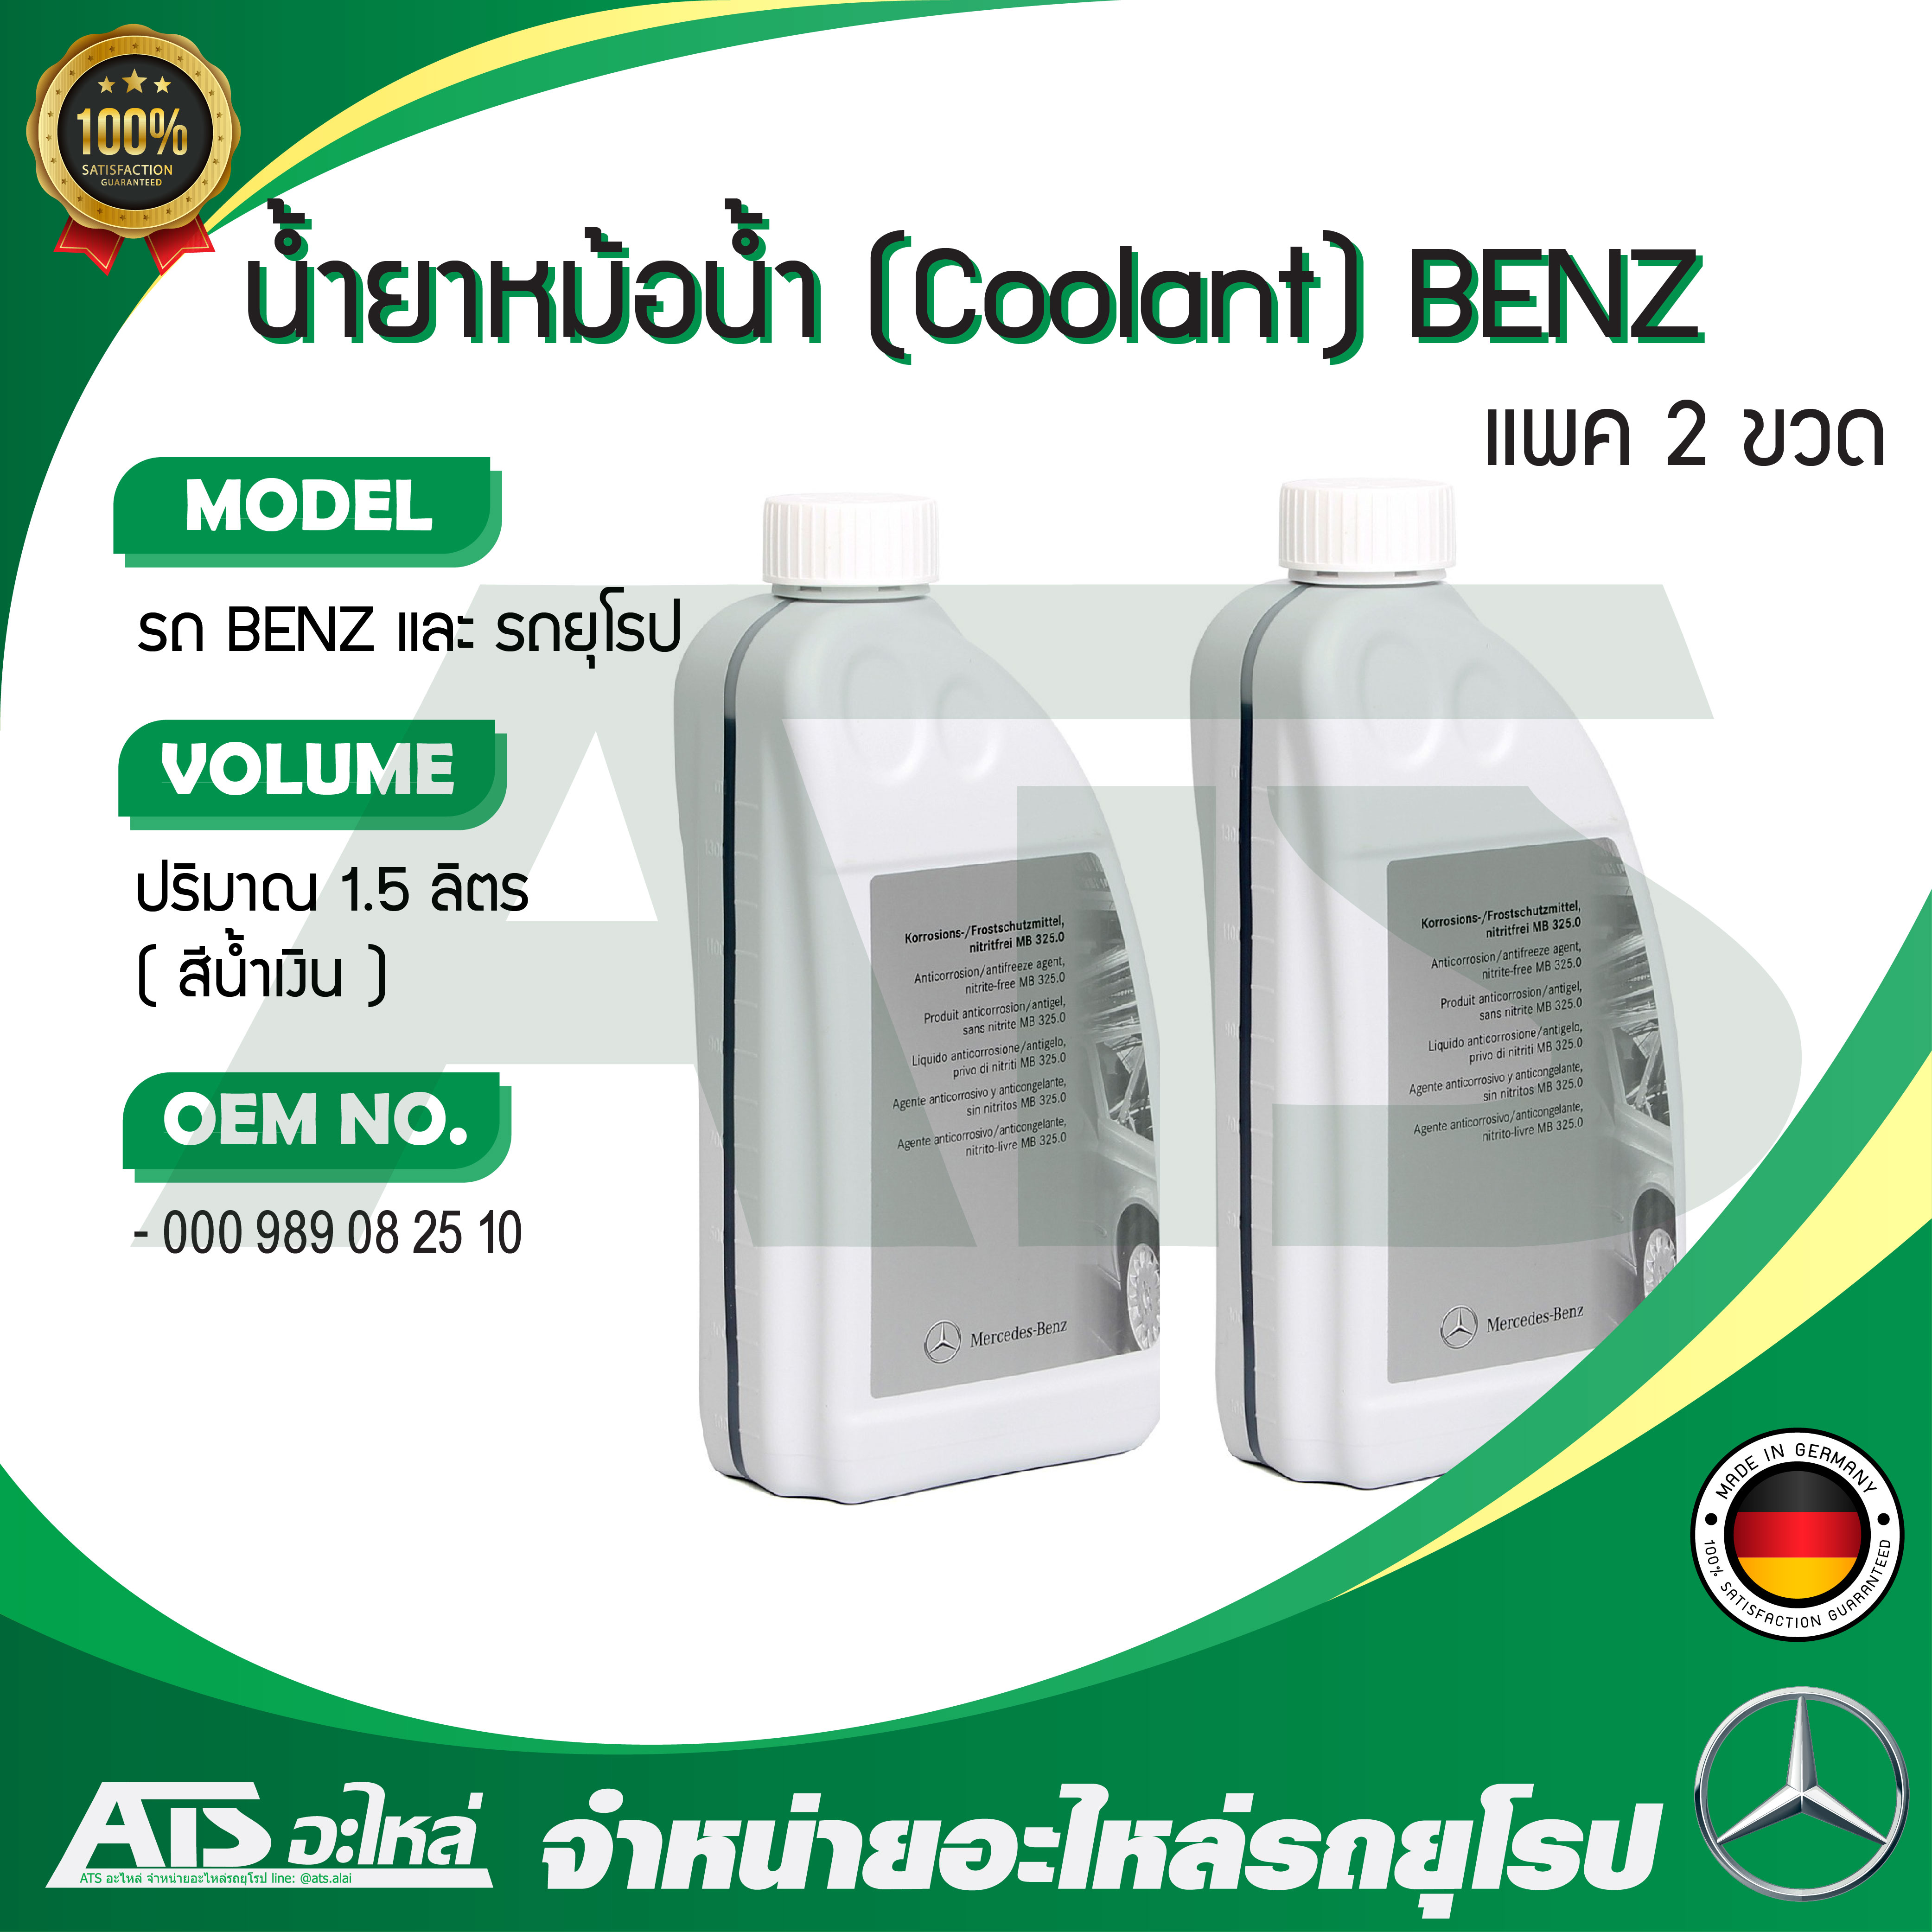 BENZ ( แพค 2 ขวด ) น้ำยาหม้อน้ำ น้ำยาหล่อเย็น (Coolant) BENZ ชนิดเข้มข้น ขนาด 1.5 ลิตร น้ำสีน้ำเงิน (OE No. 000 989 08 25 10) Made in Germany